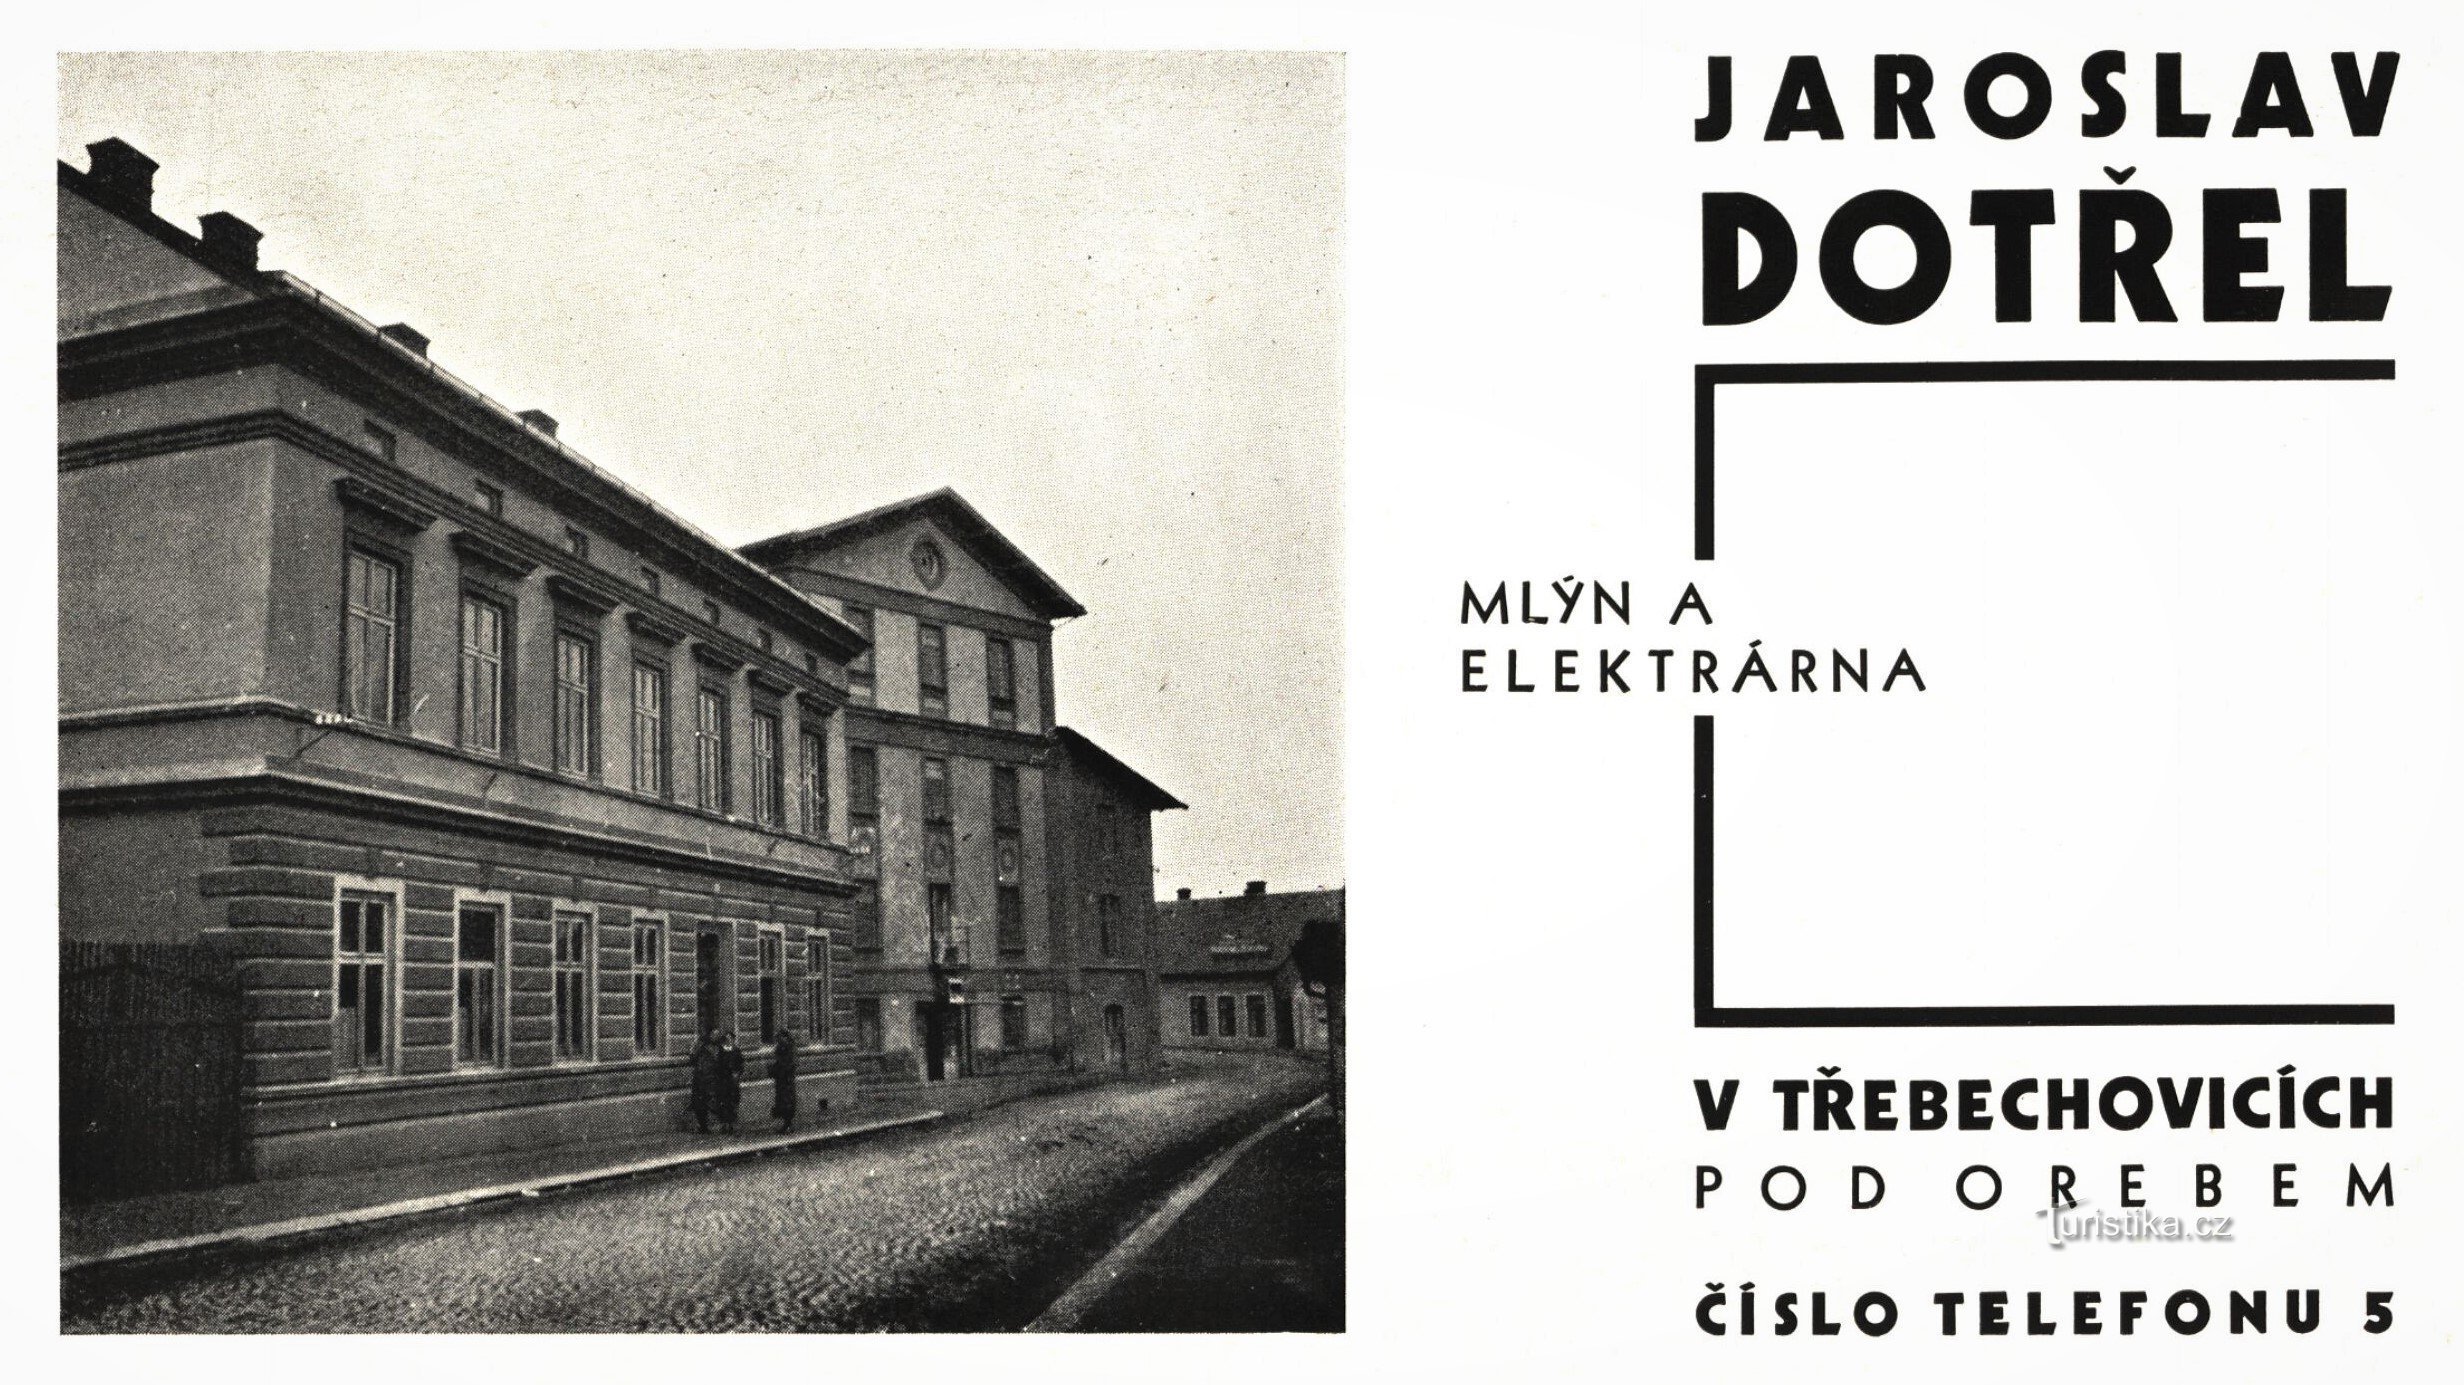 Епохальна реклама мірошника Ярослава Дотреля (1934)